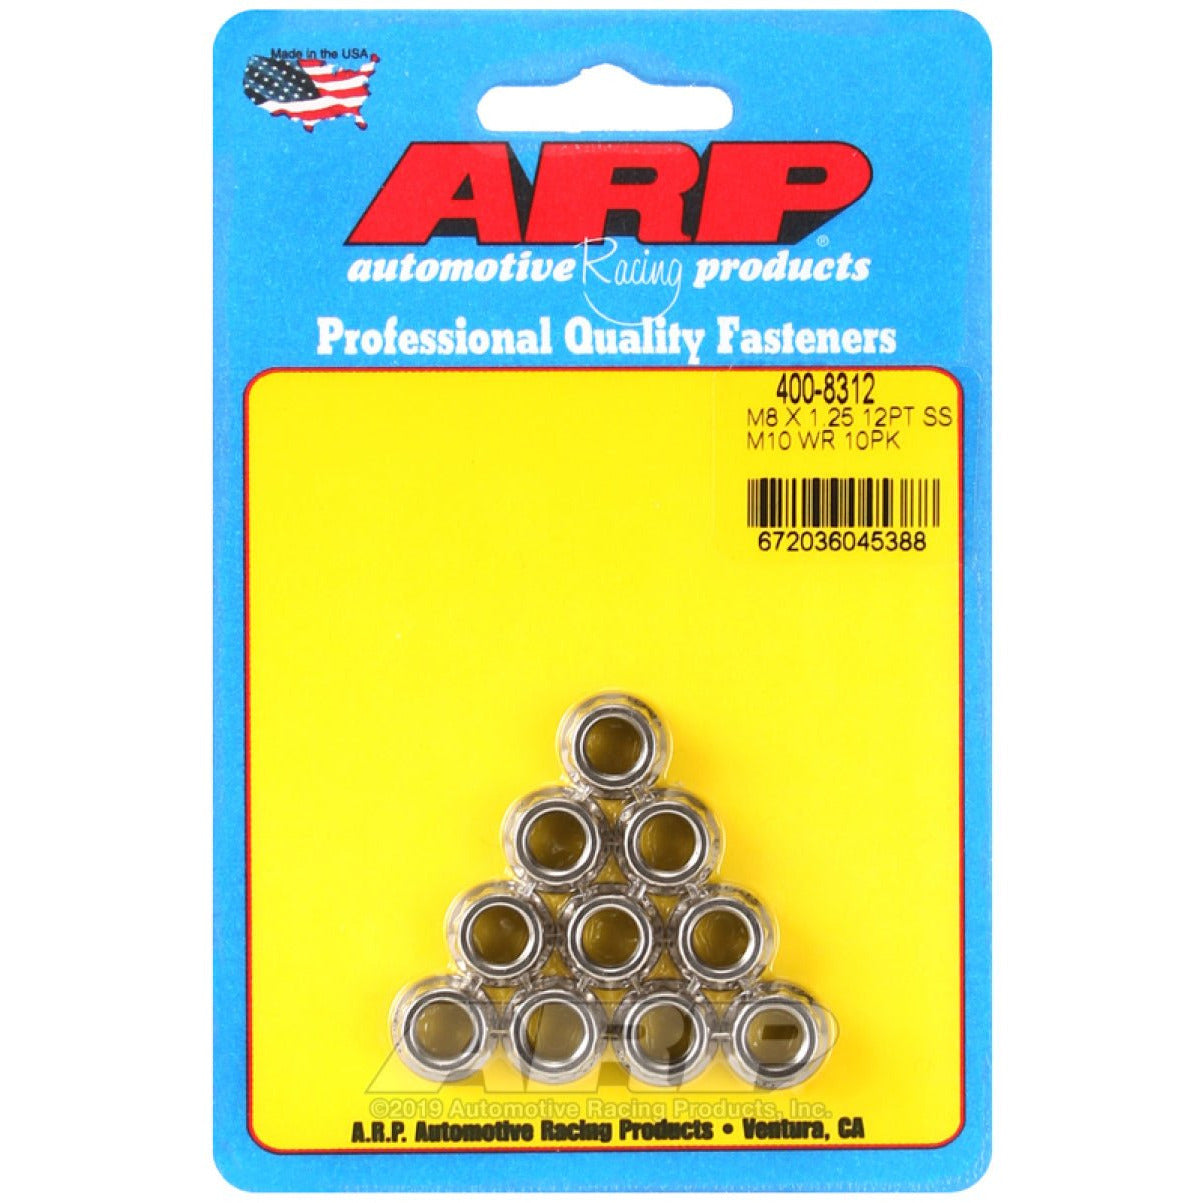 ARP M8 x 1.25 12pt SS Nut Kit ARP Hardware Kits - Other